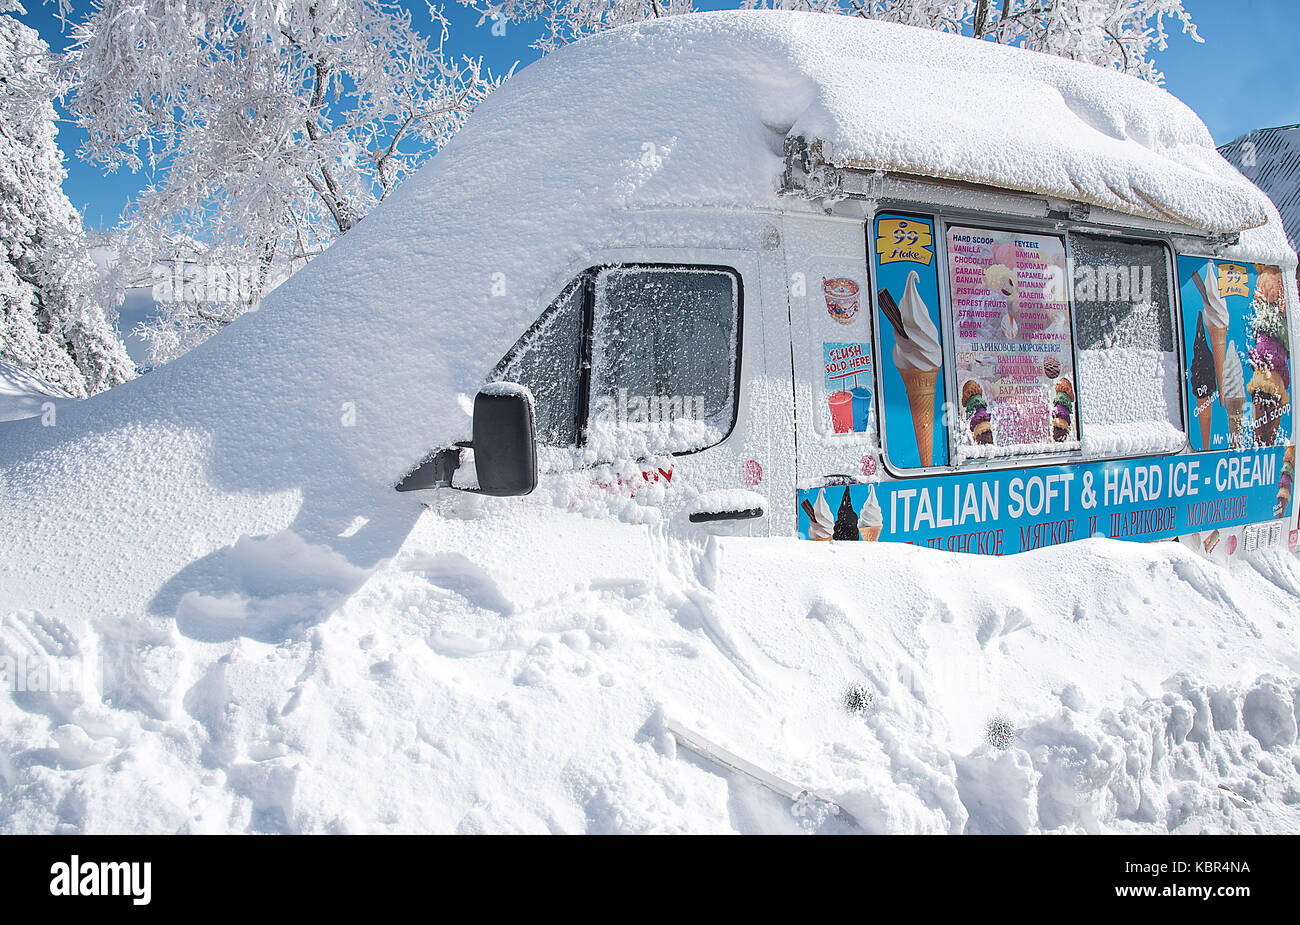 Ice cream van in the winter snow. Troodos Mountains, Cyprus Stock Photo